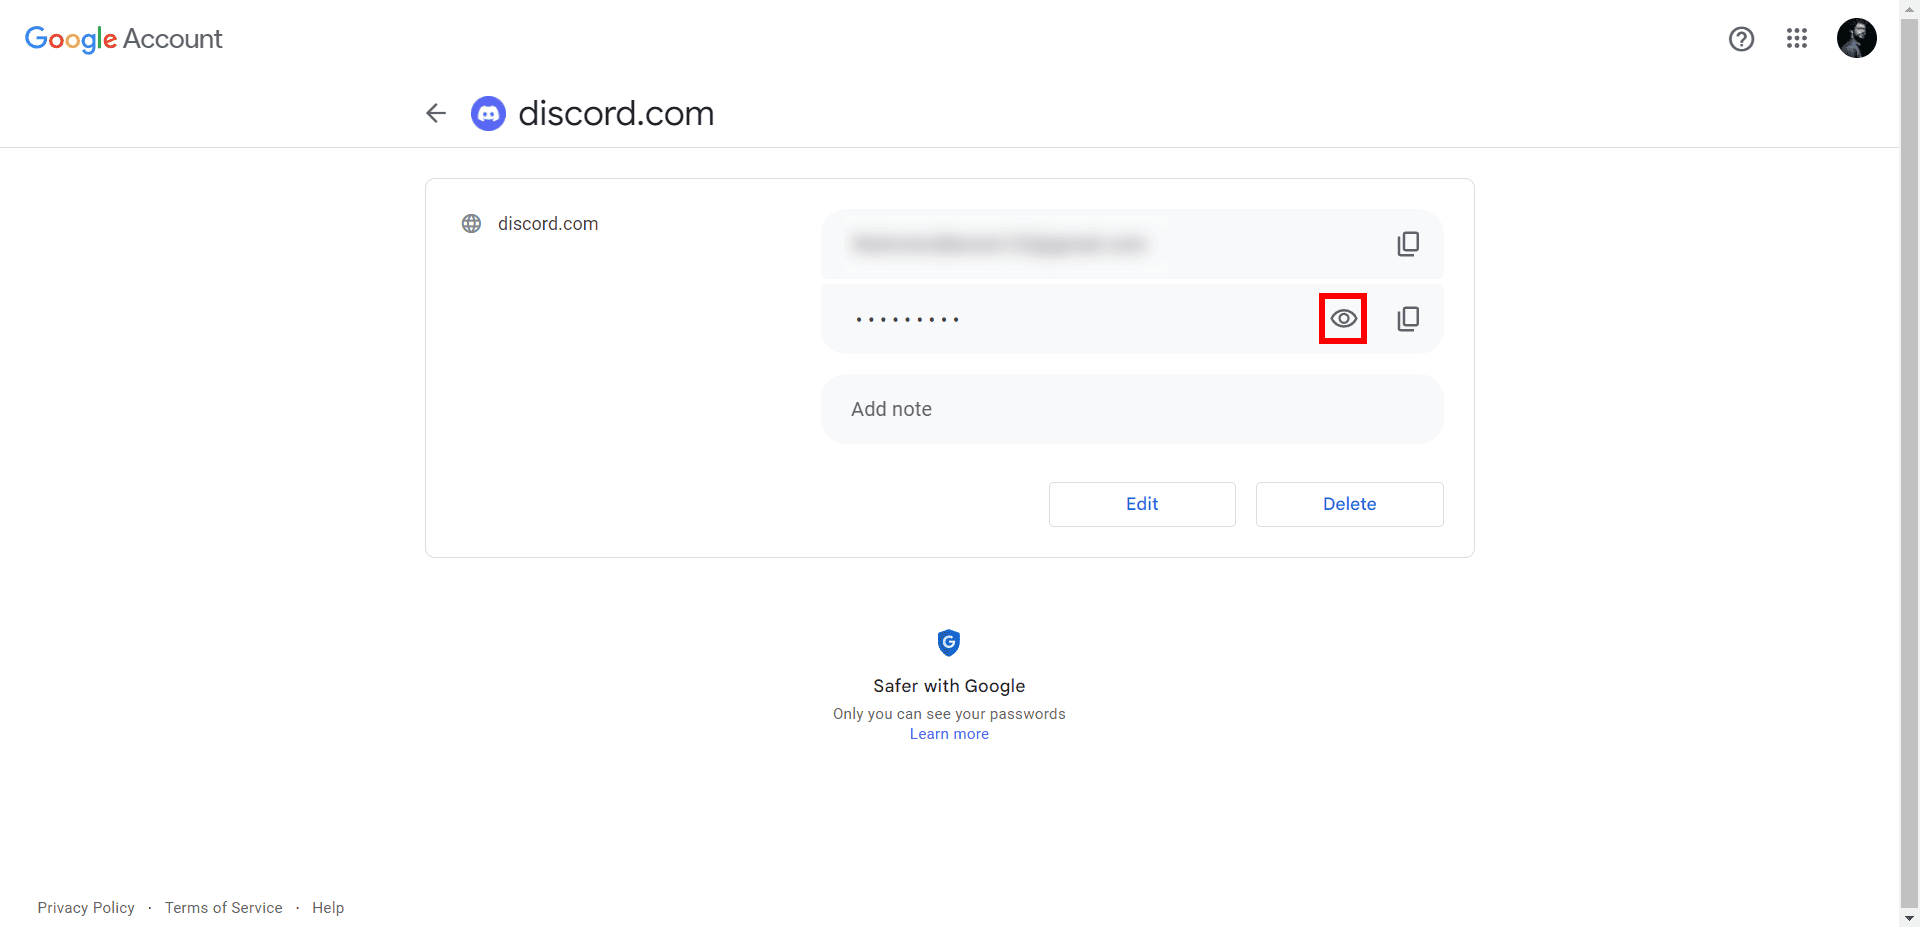 Click on the Eye icon next to the password 